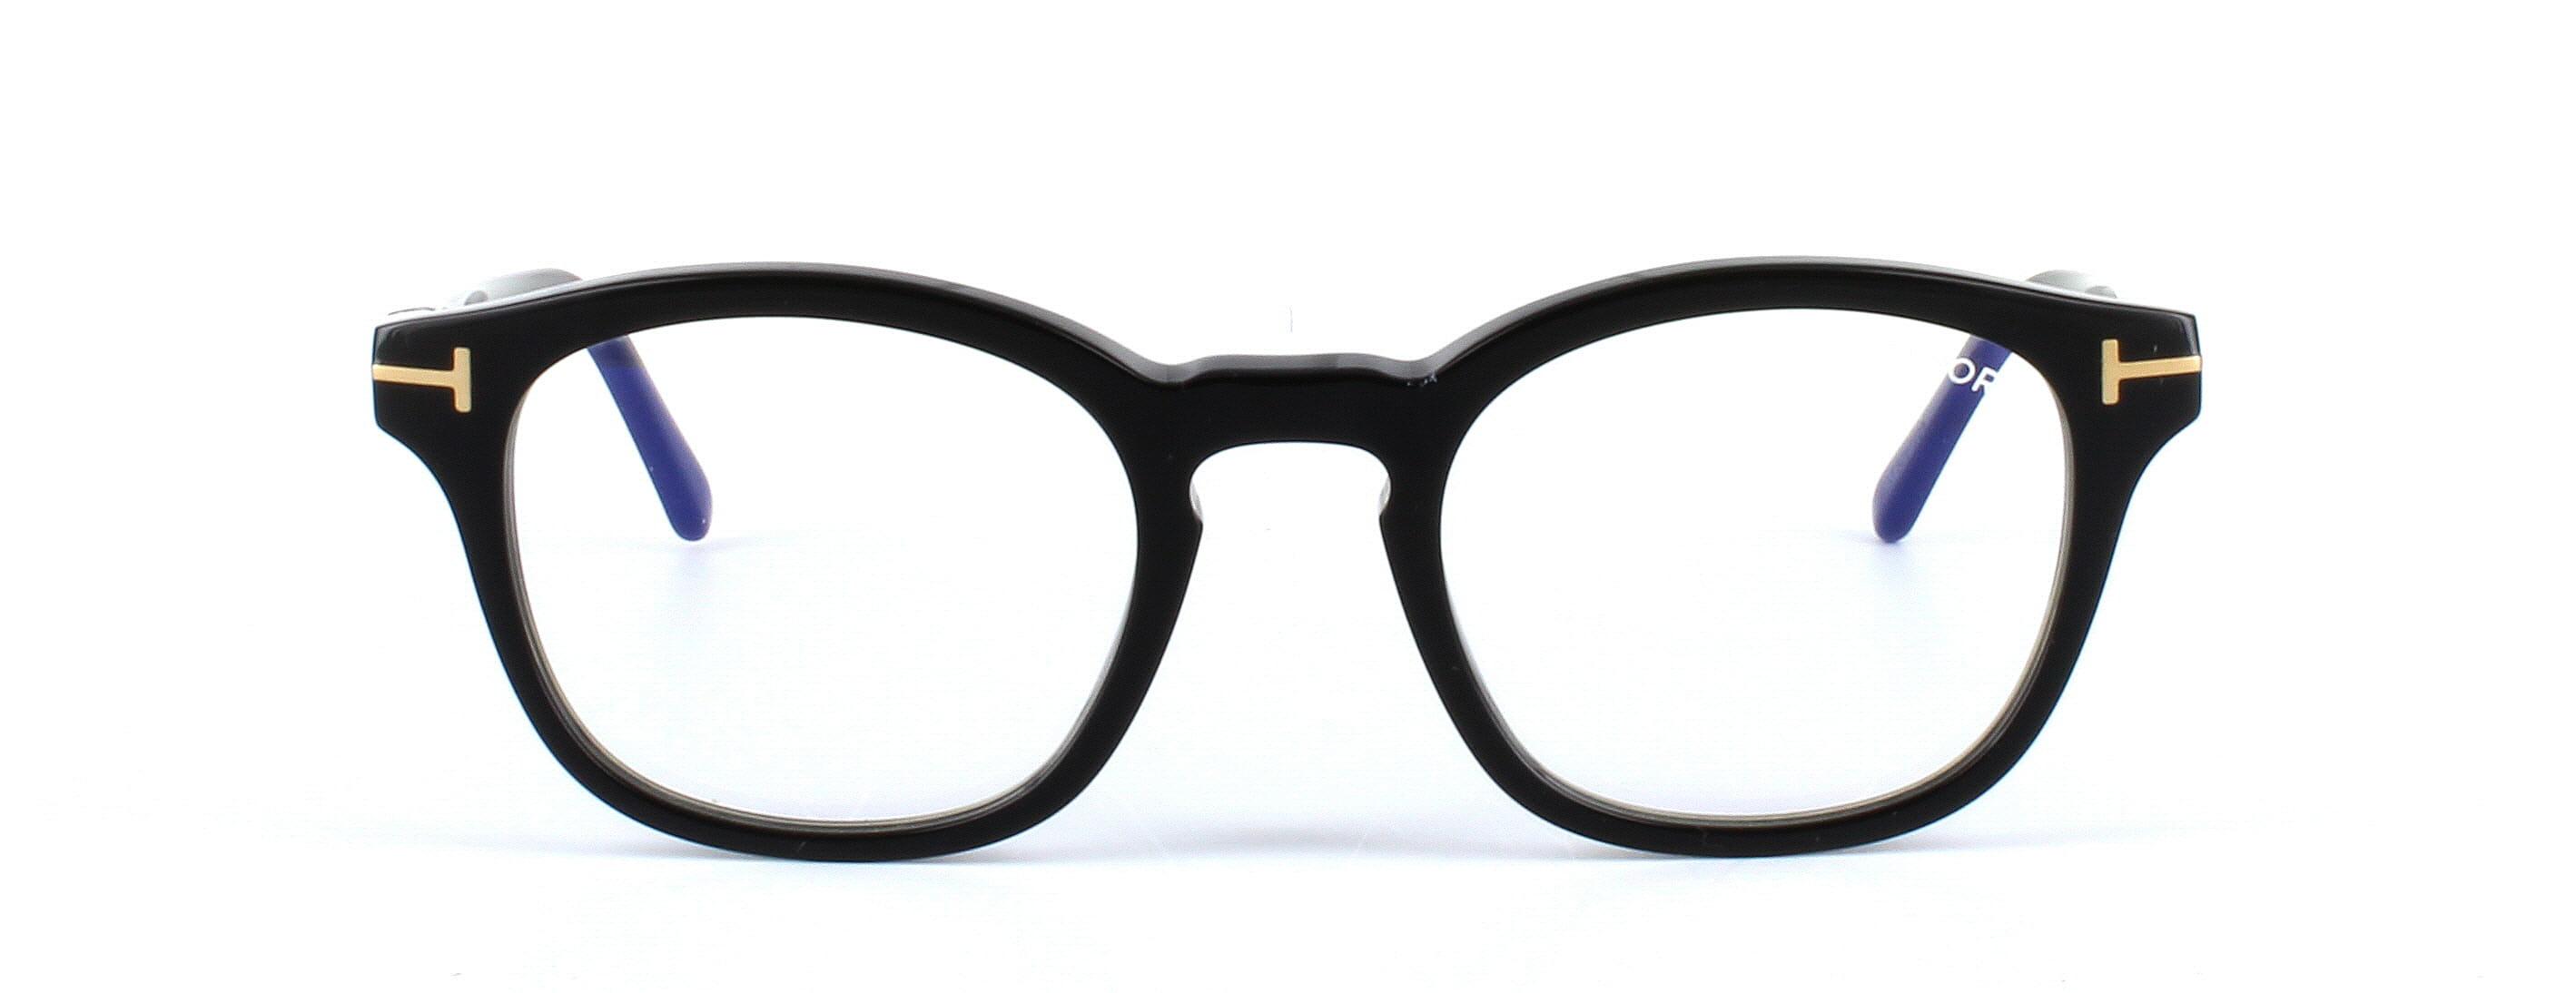 Tom Ford glasses model 5532 - Product image 5